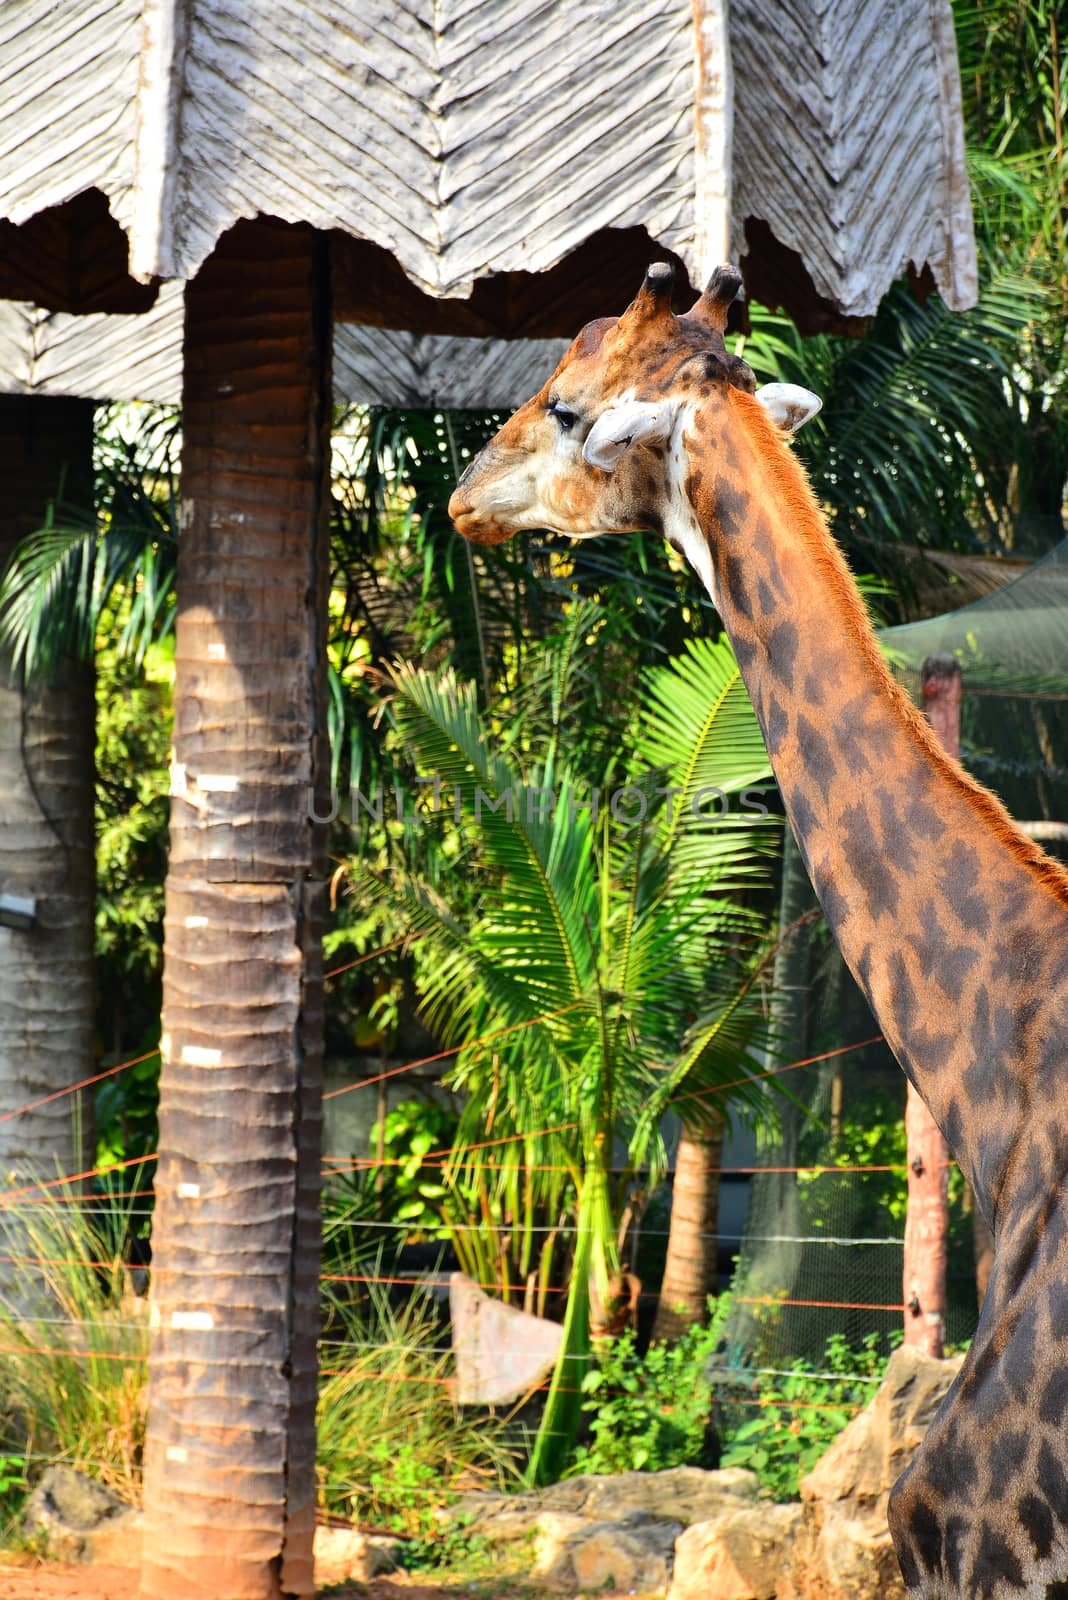 BANGKOK, TH - DEC 13: Giraffe at Dusit Zoo on December 13, 2016 in Khao Din Park, Bangkok, Thailand. Dusit Zoo is the oldest zoo in Bangkok, Thailand.